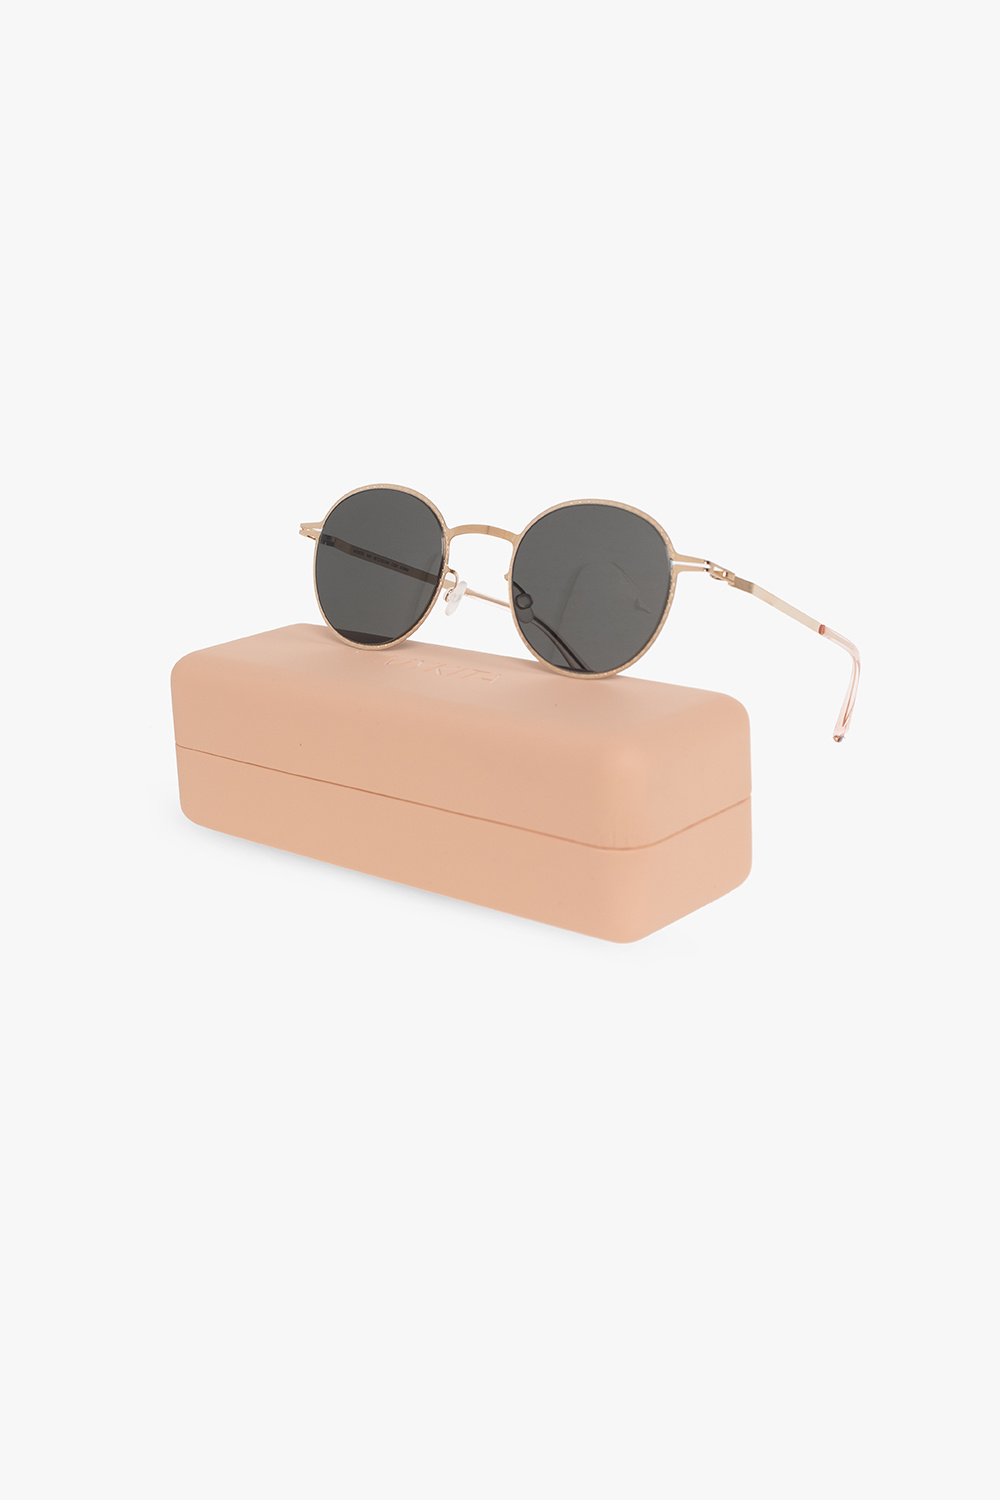 Mykita ‘Nis’ Harrison sunglasses